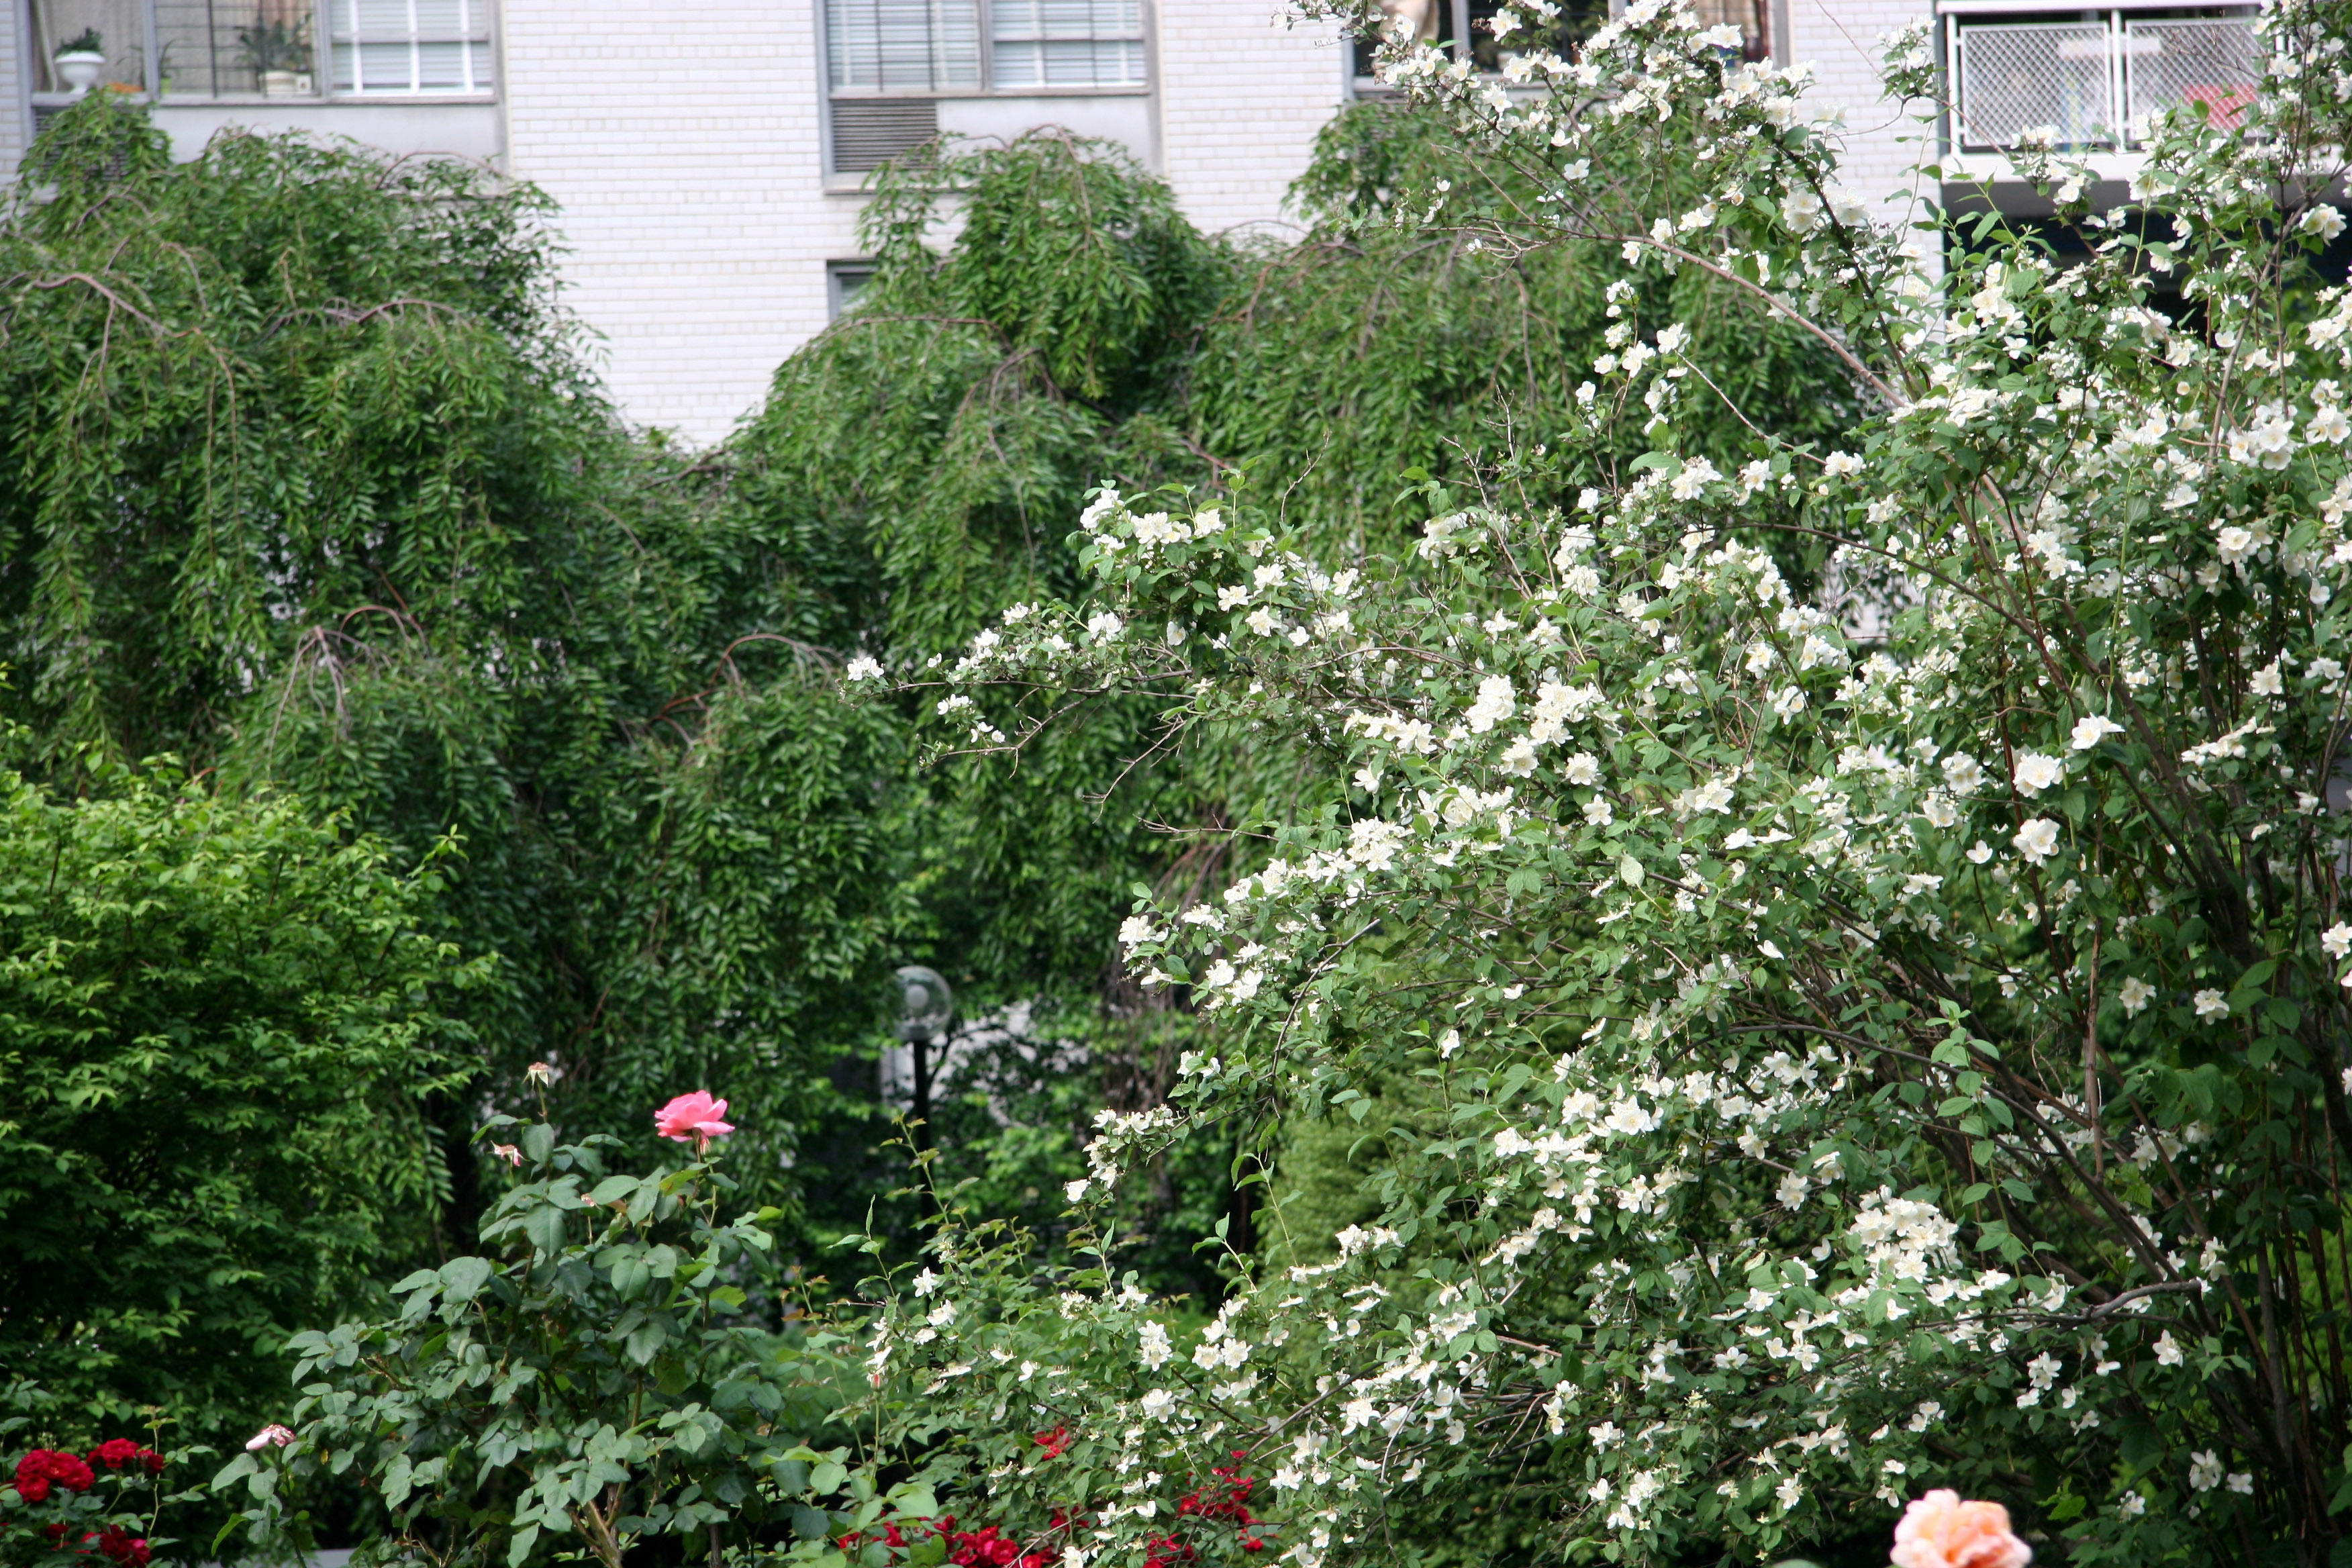 Garden View - Mock Orange Bush & Roses